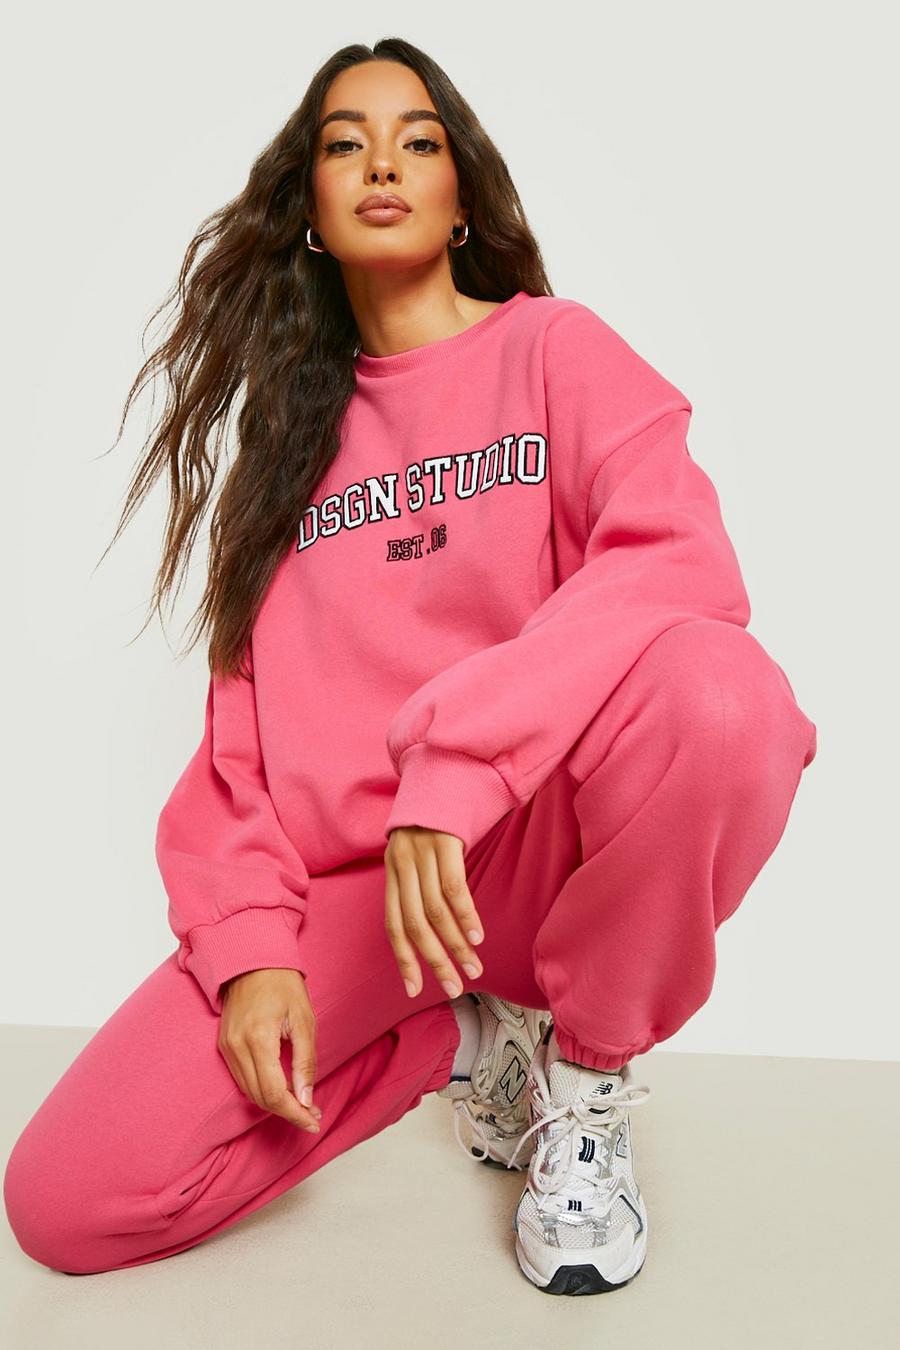 Hot pink rose Dsgn Studio Applique Sweater Tracksuit